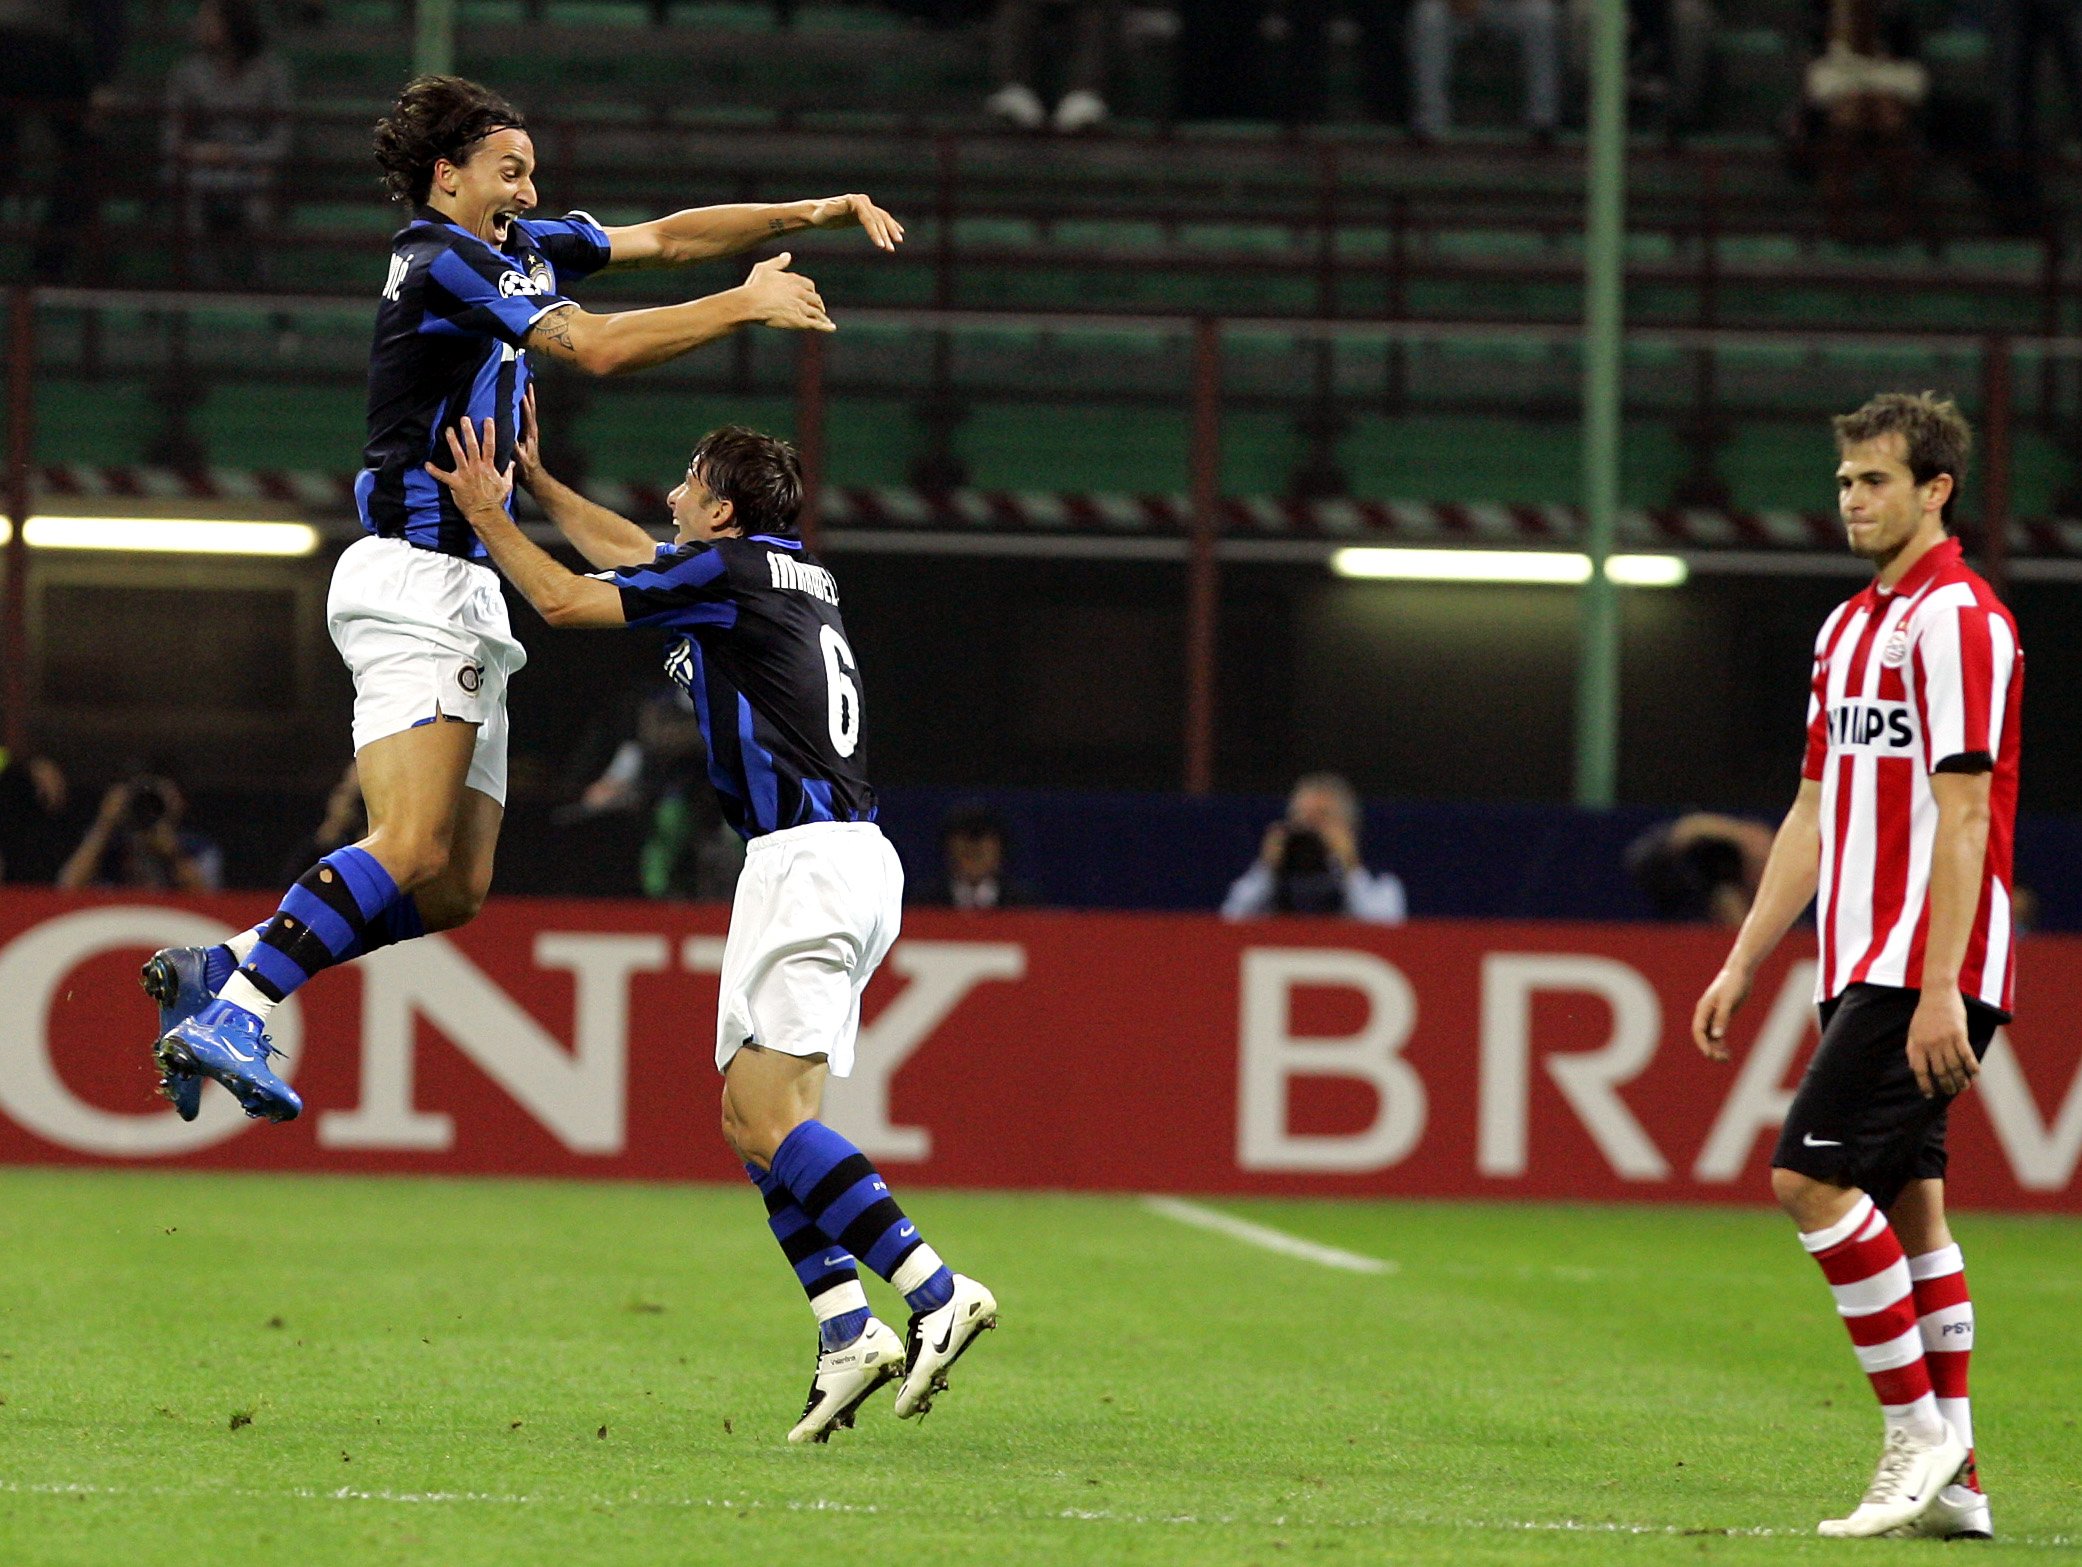 Fotboll, Zlatan Ibrahimovic, serie a, Italien, milan, PSG